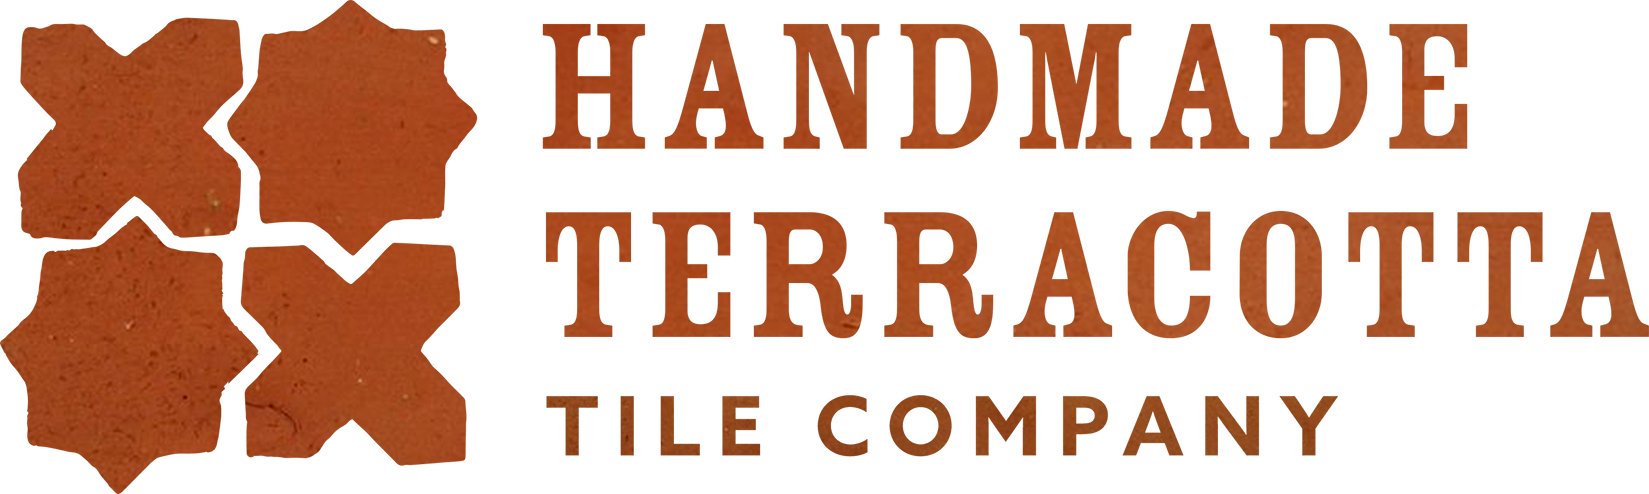 Handmade Terracotta Tile Company